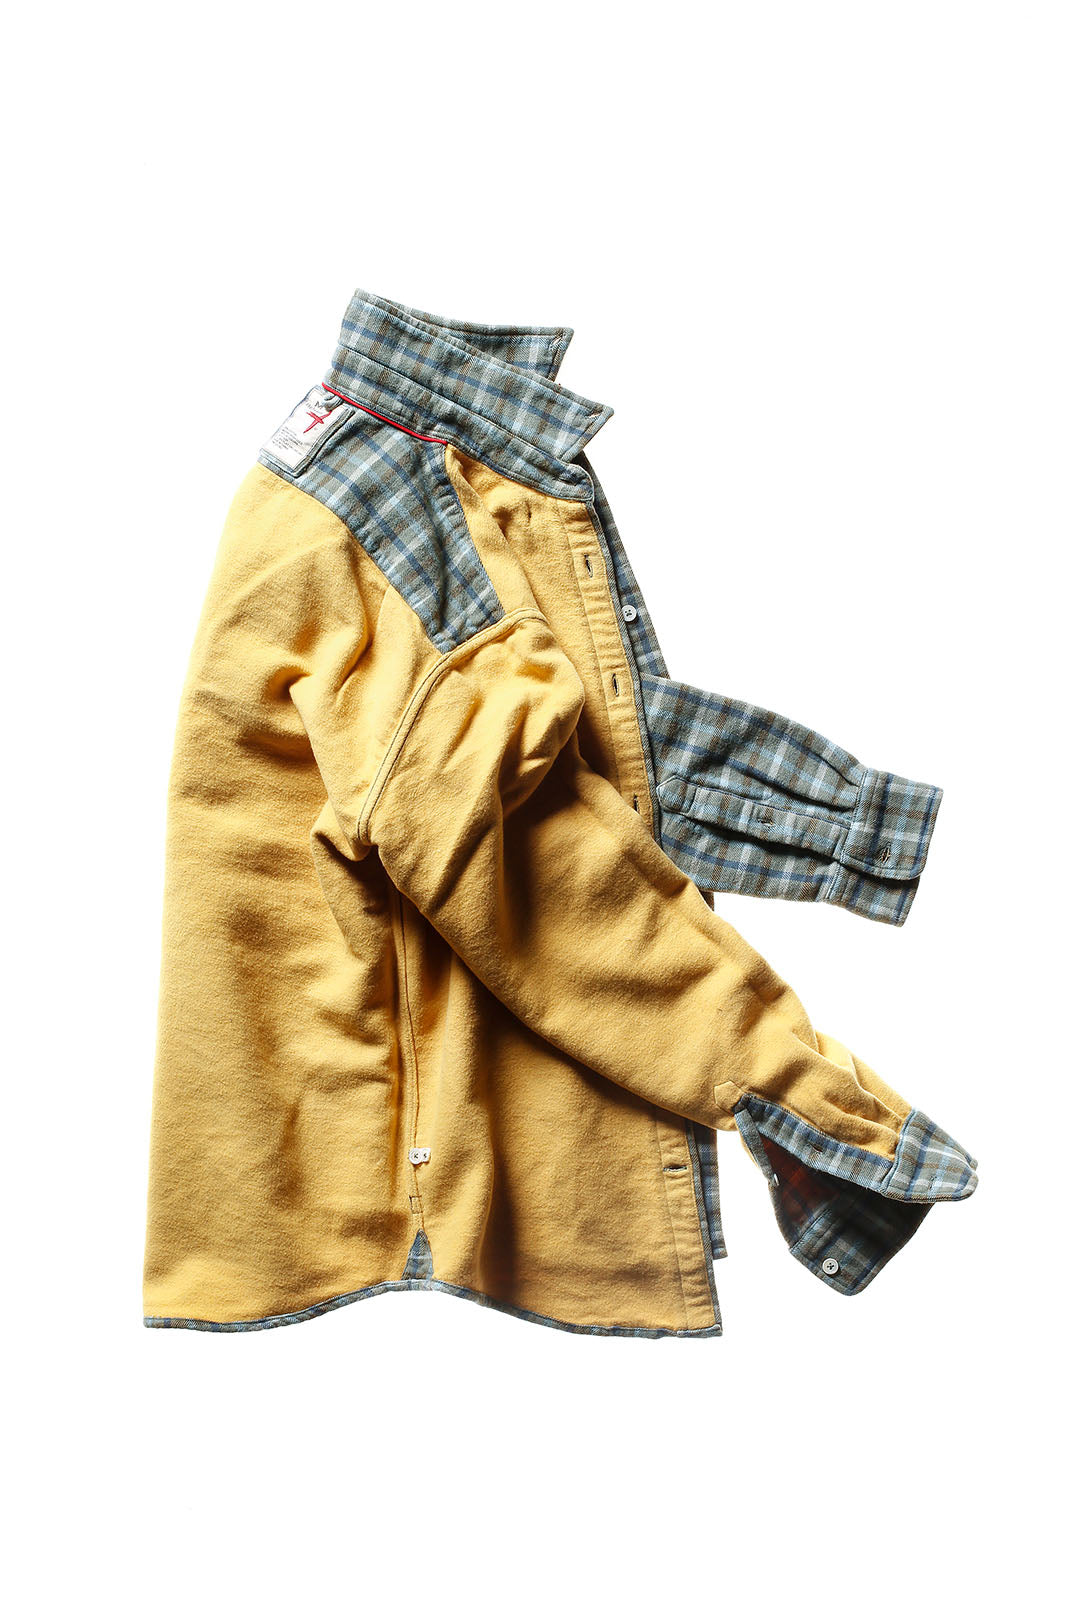 Chamois Lined Flannel Shirt - Hazel Grid